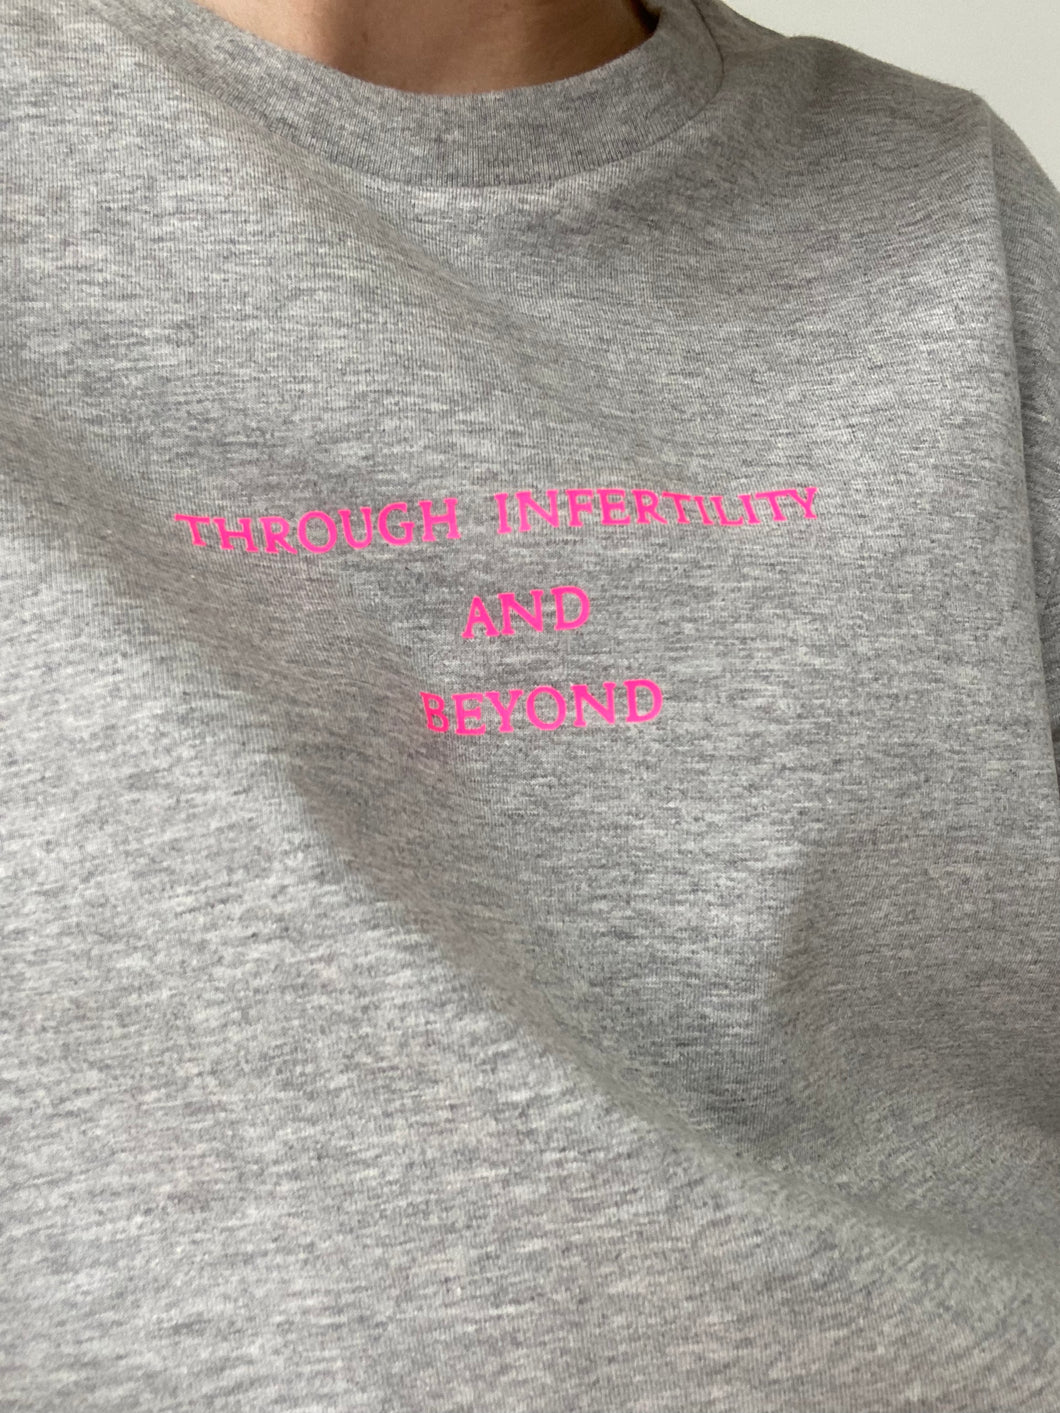 infertility-IVF-T-shirt-Grey-pink-font-T-shirt